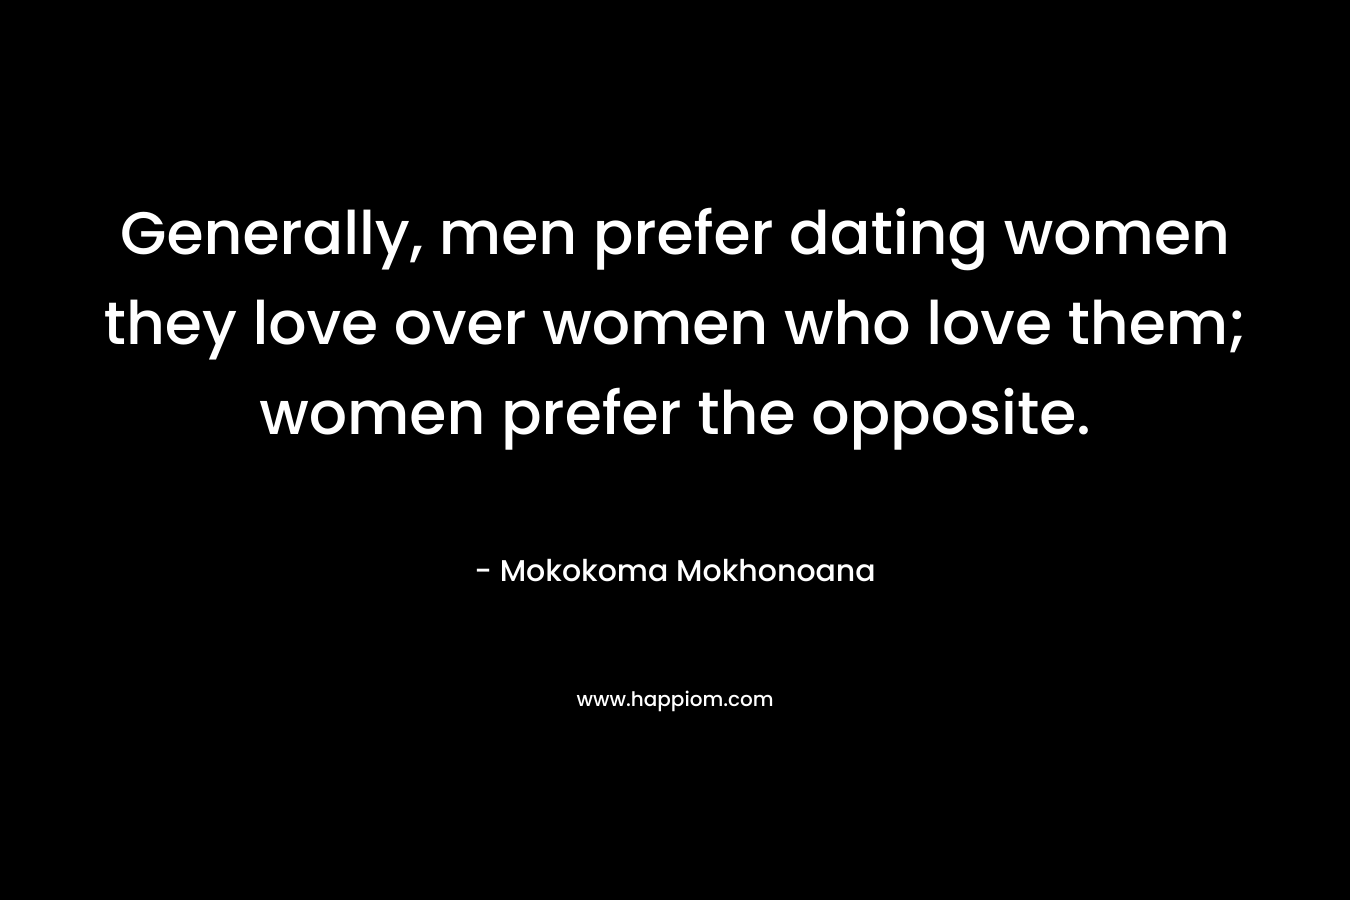 Generally, men prefer dating women they love over women who love them; women prefer the opposite.